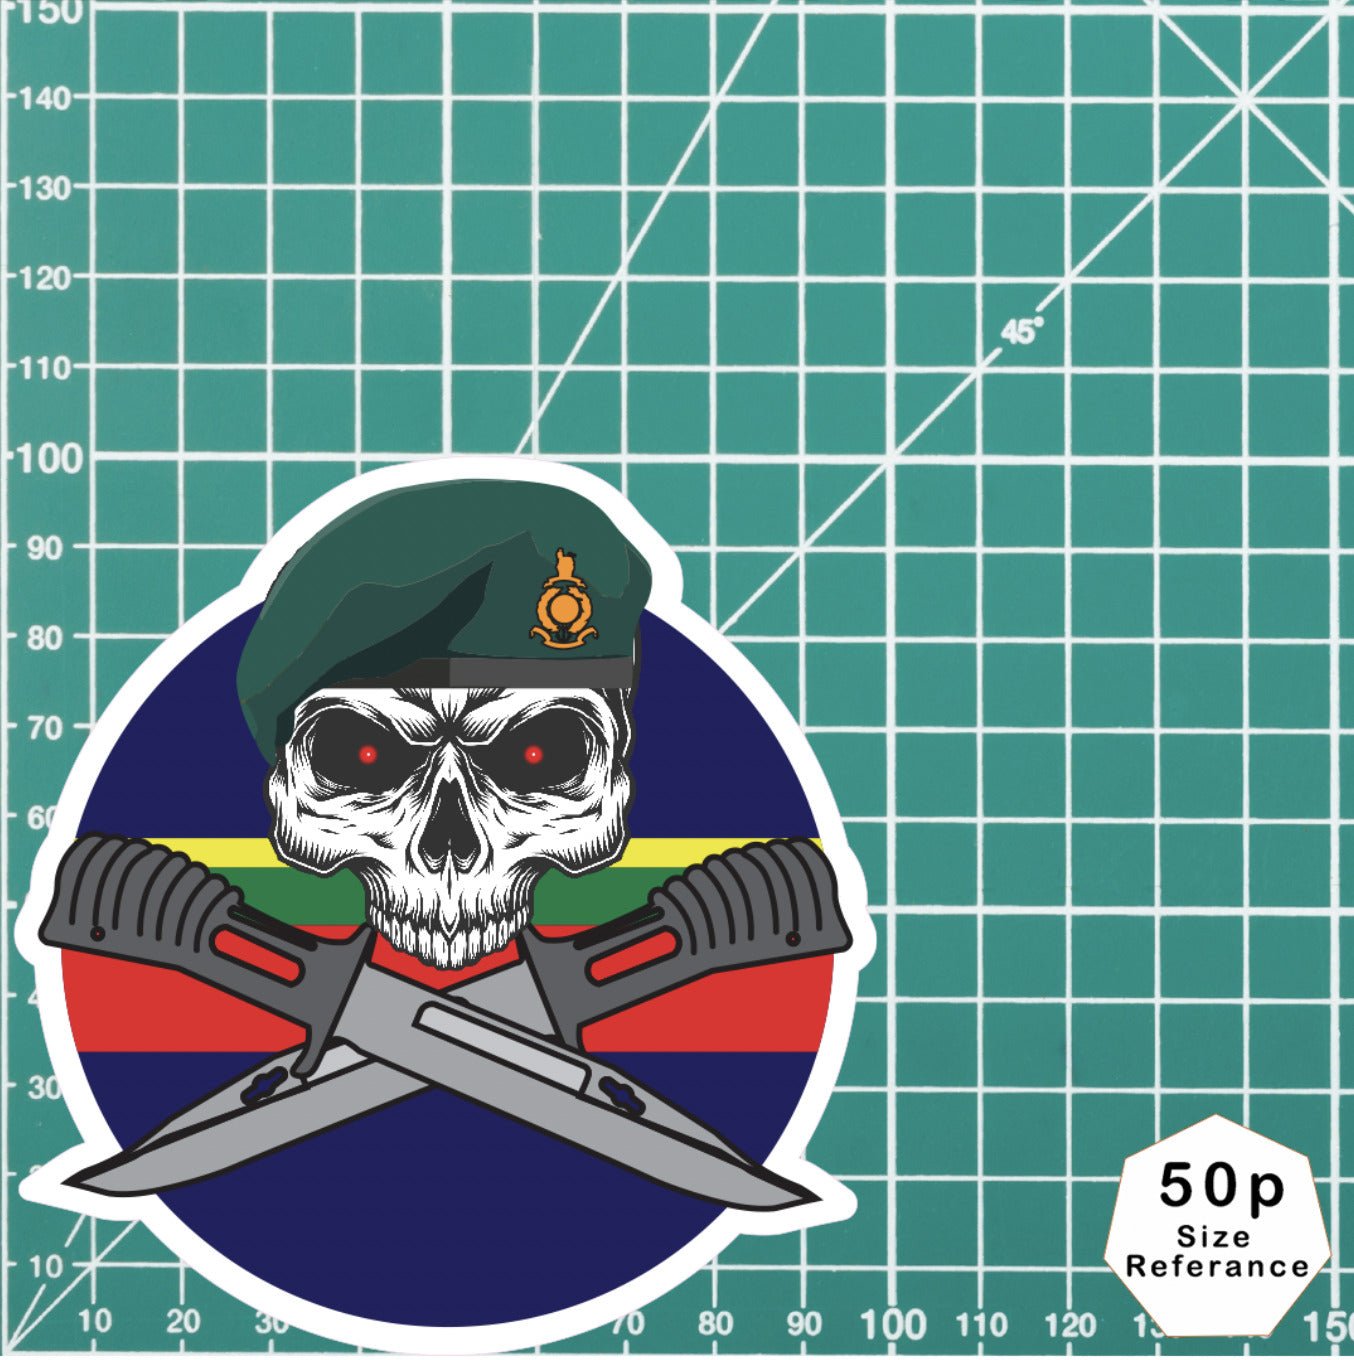 Royal Marine Commandos Car Decal - Stylish Skull and Crossed Bayonets Design redplume